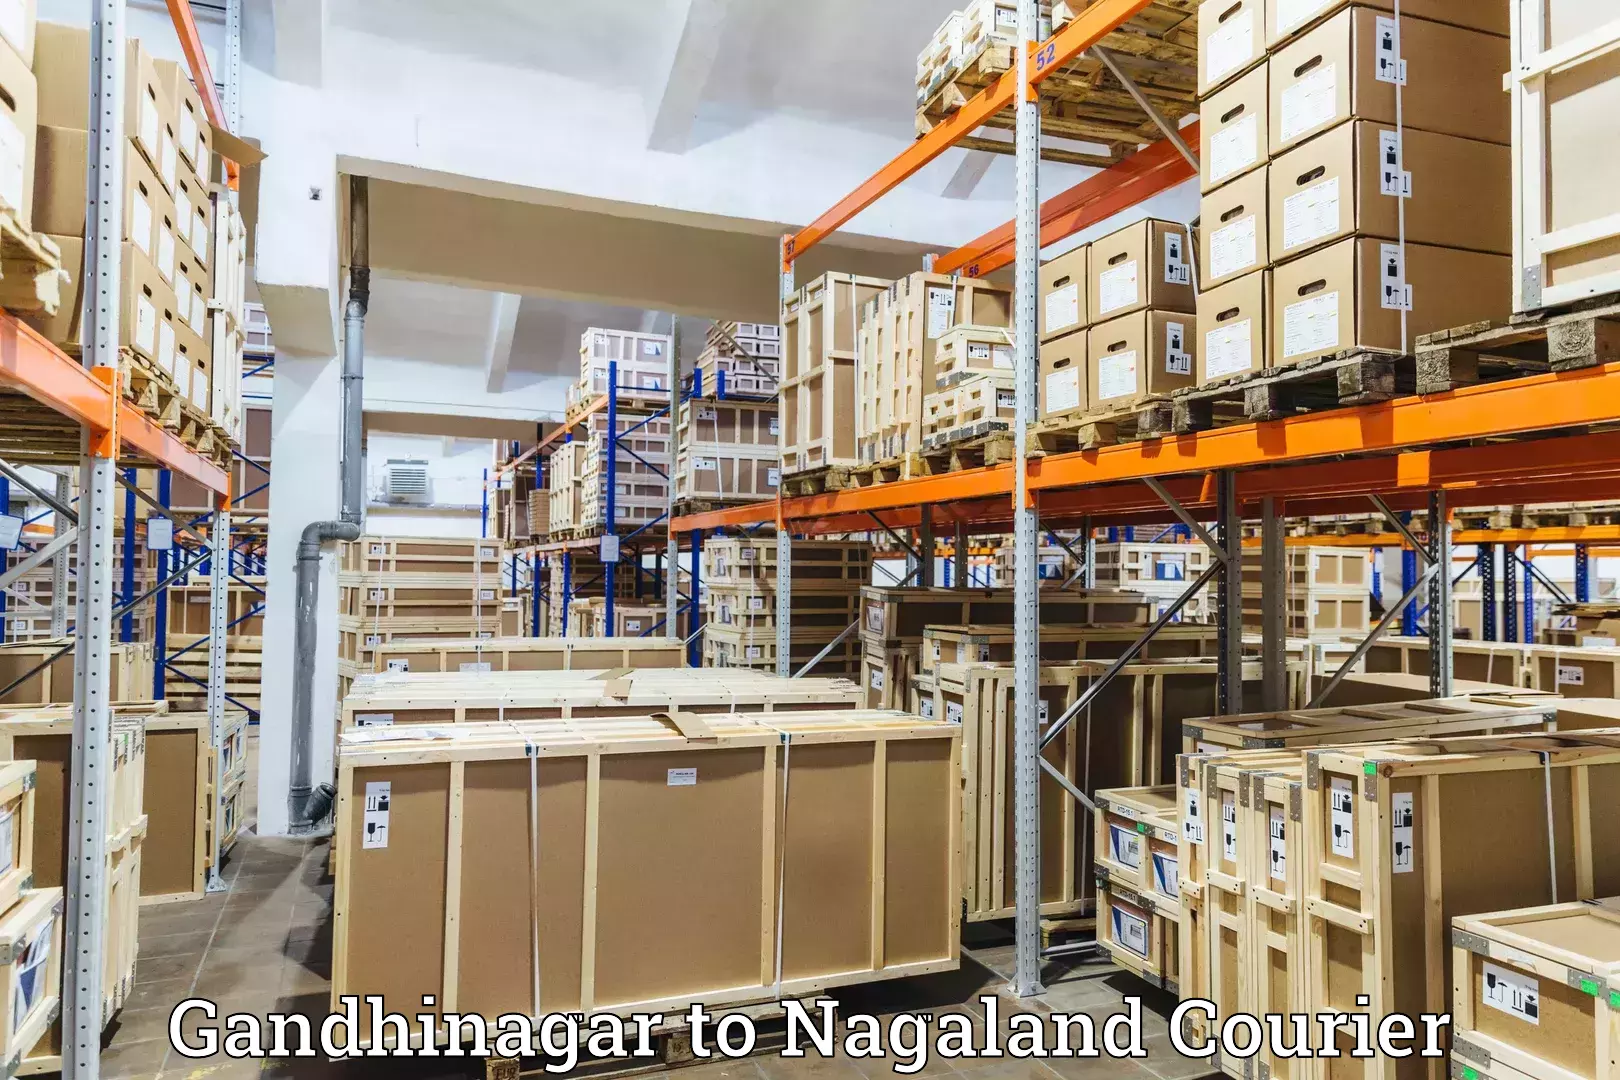 State-of-the-art courier technology Gandhinagar to Dimapur